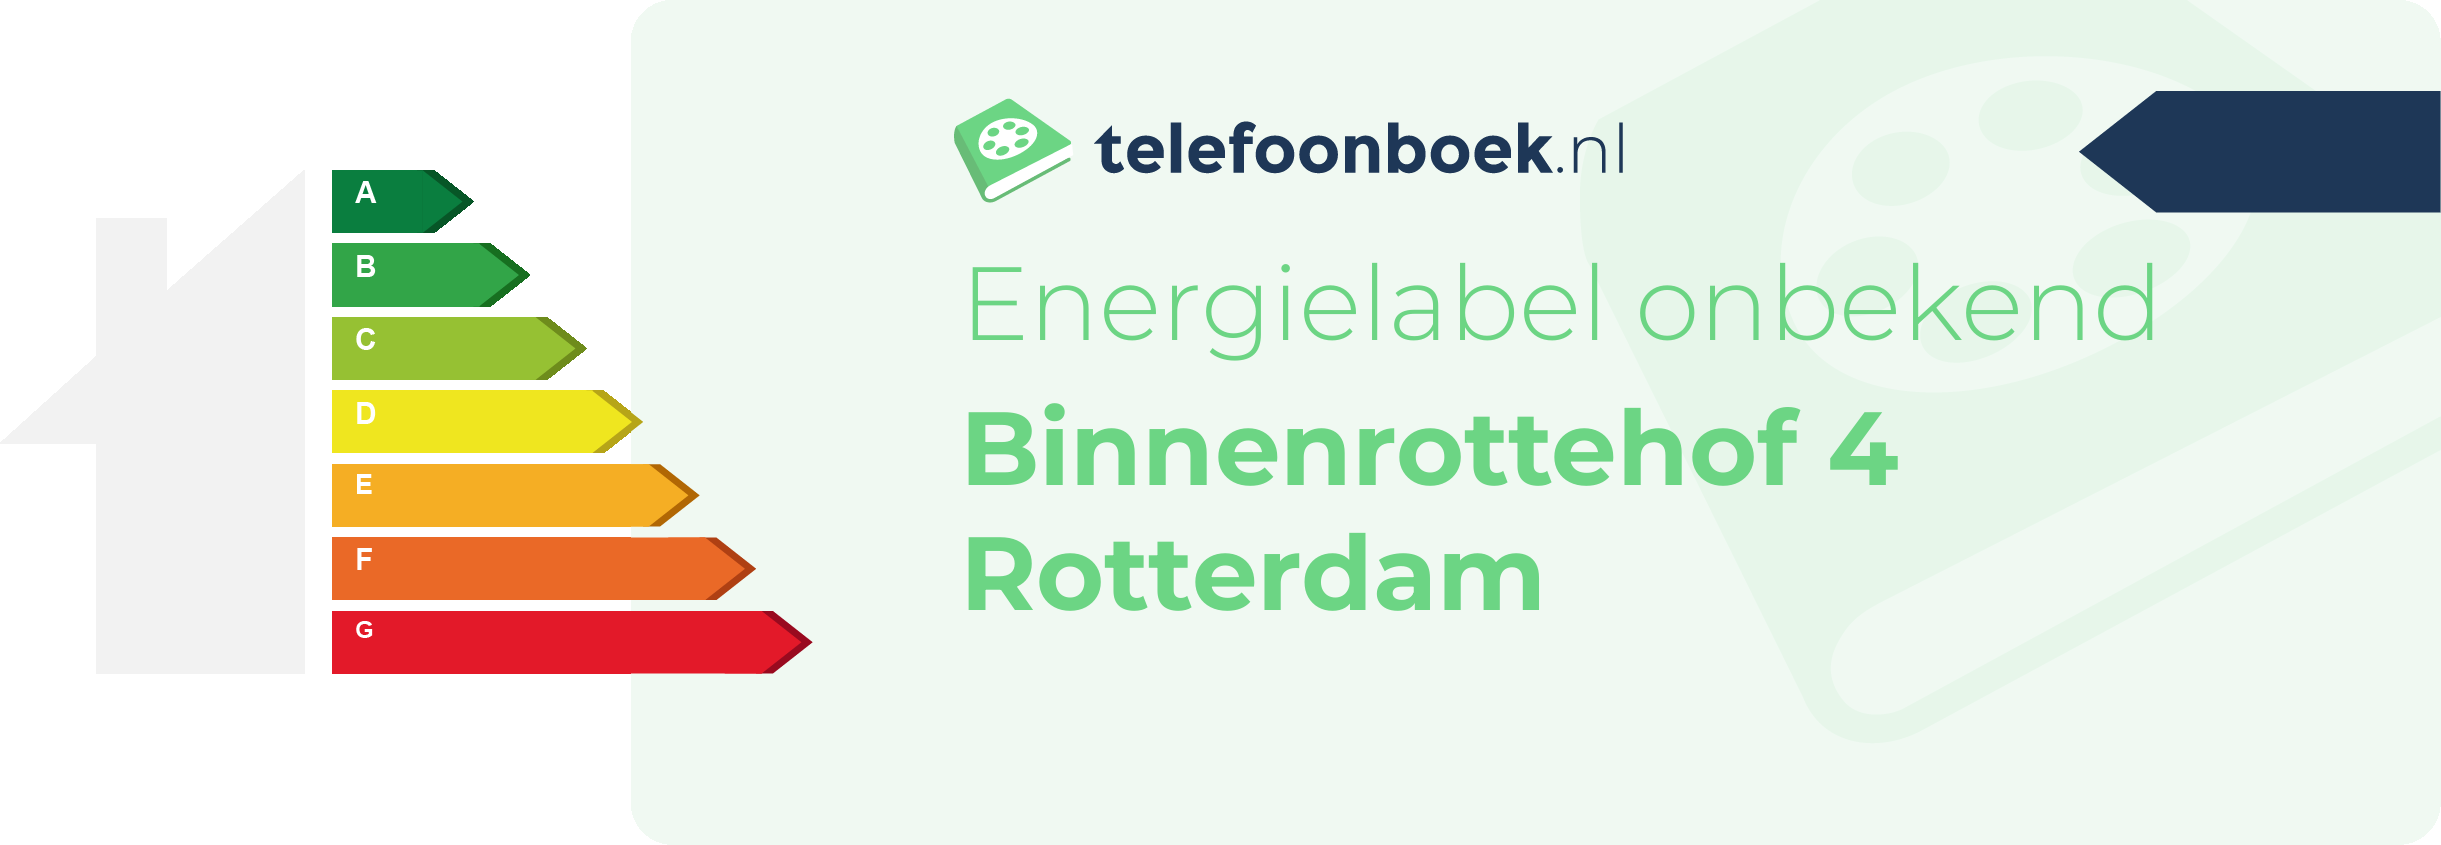 Energielabel Binnenrottehof 4 Rotterdam